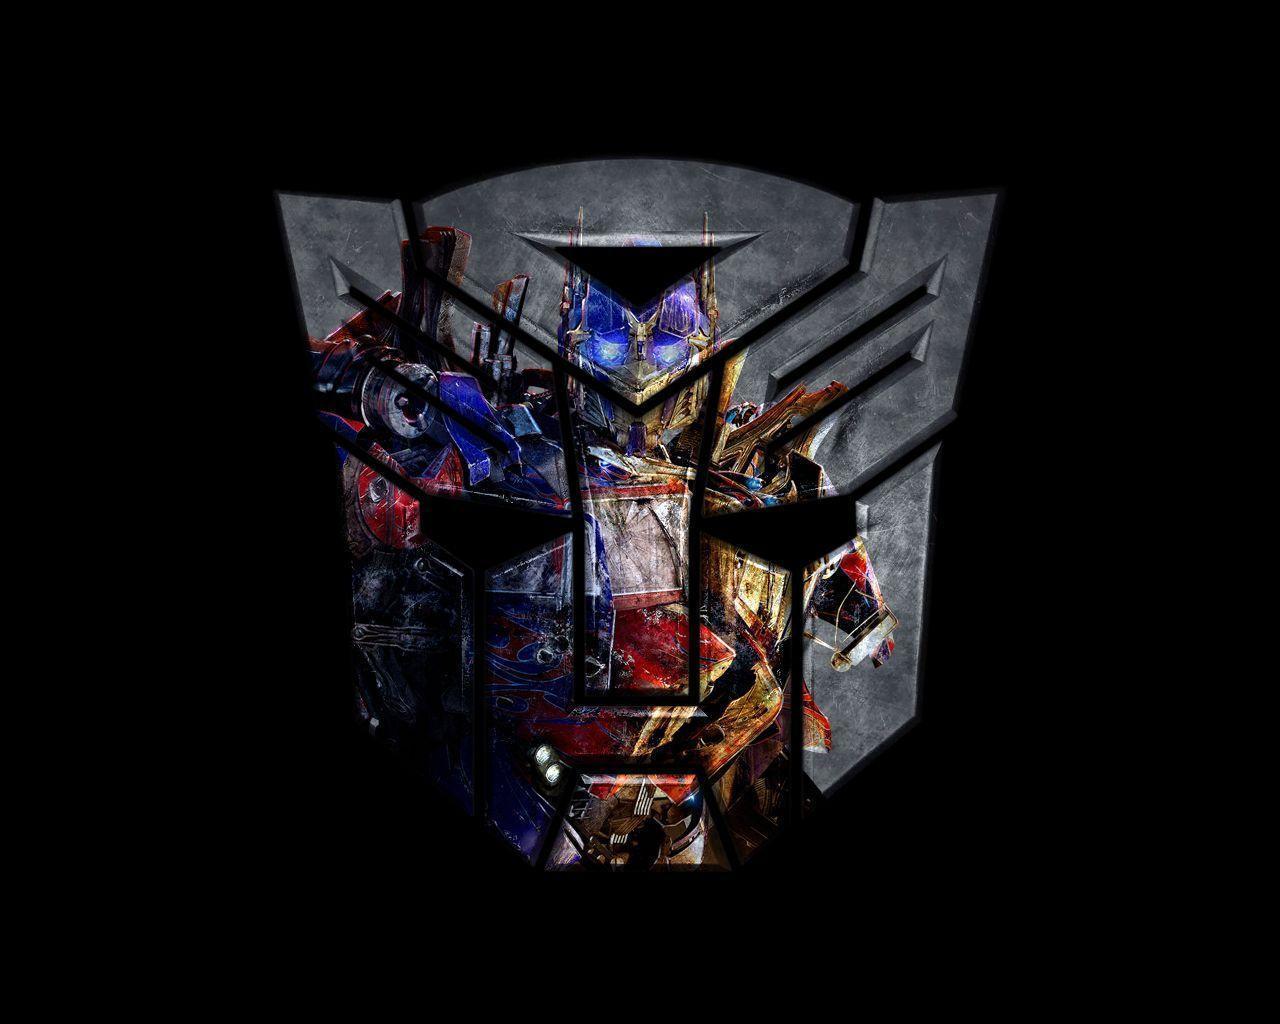 Transformers Optimus Prime Wallpaper Archives.com